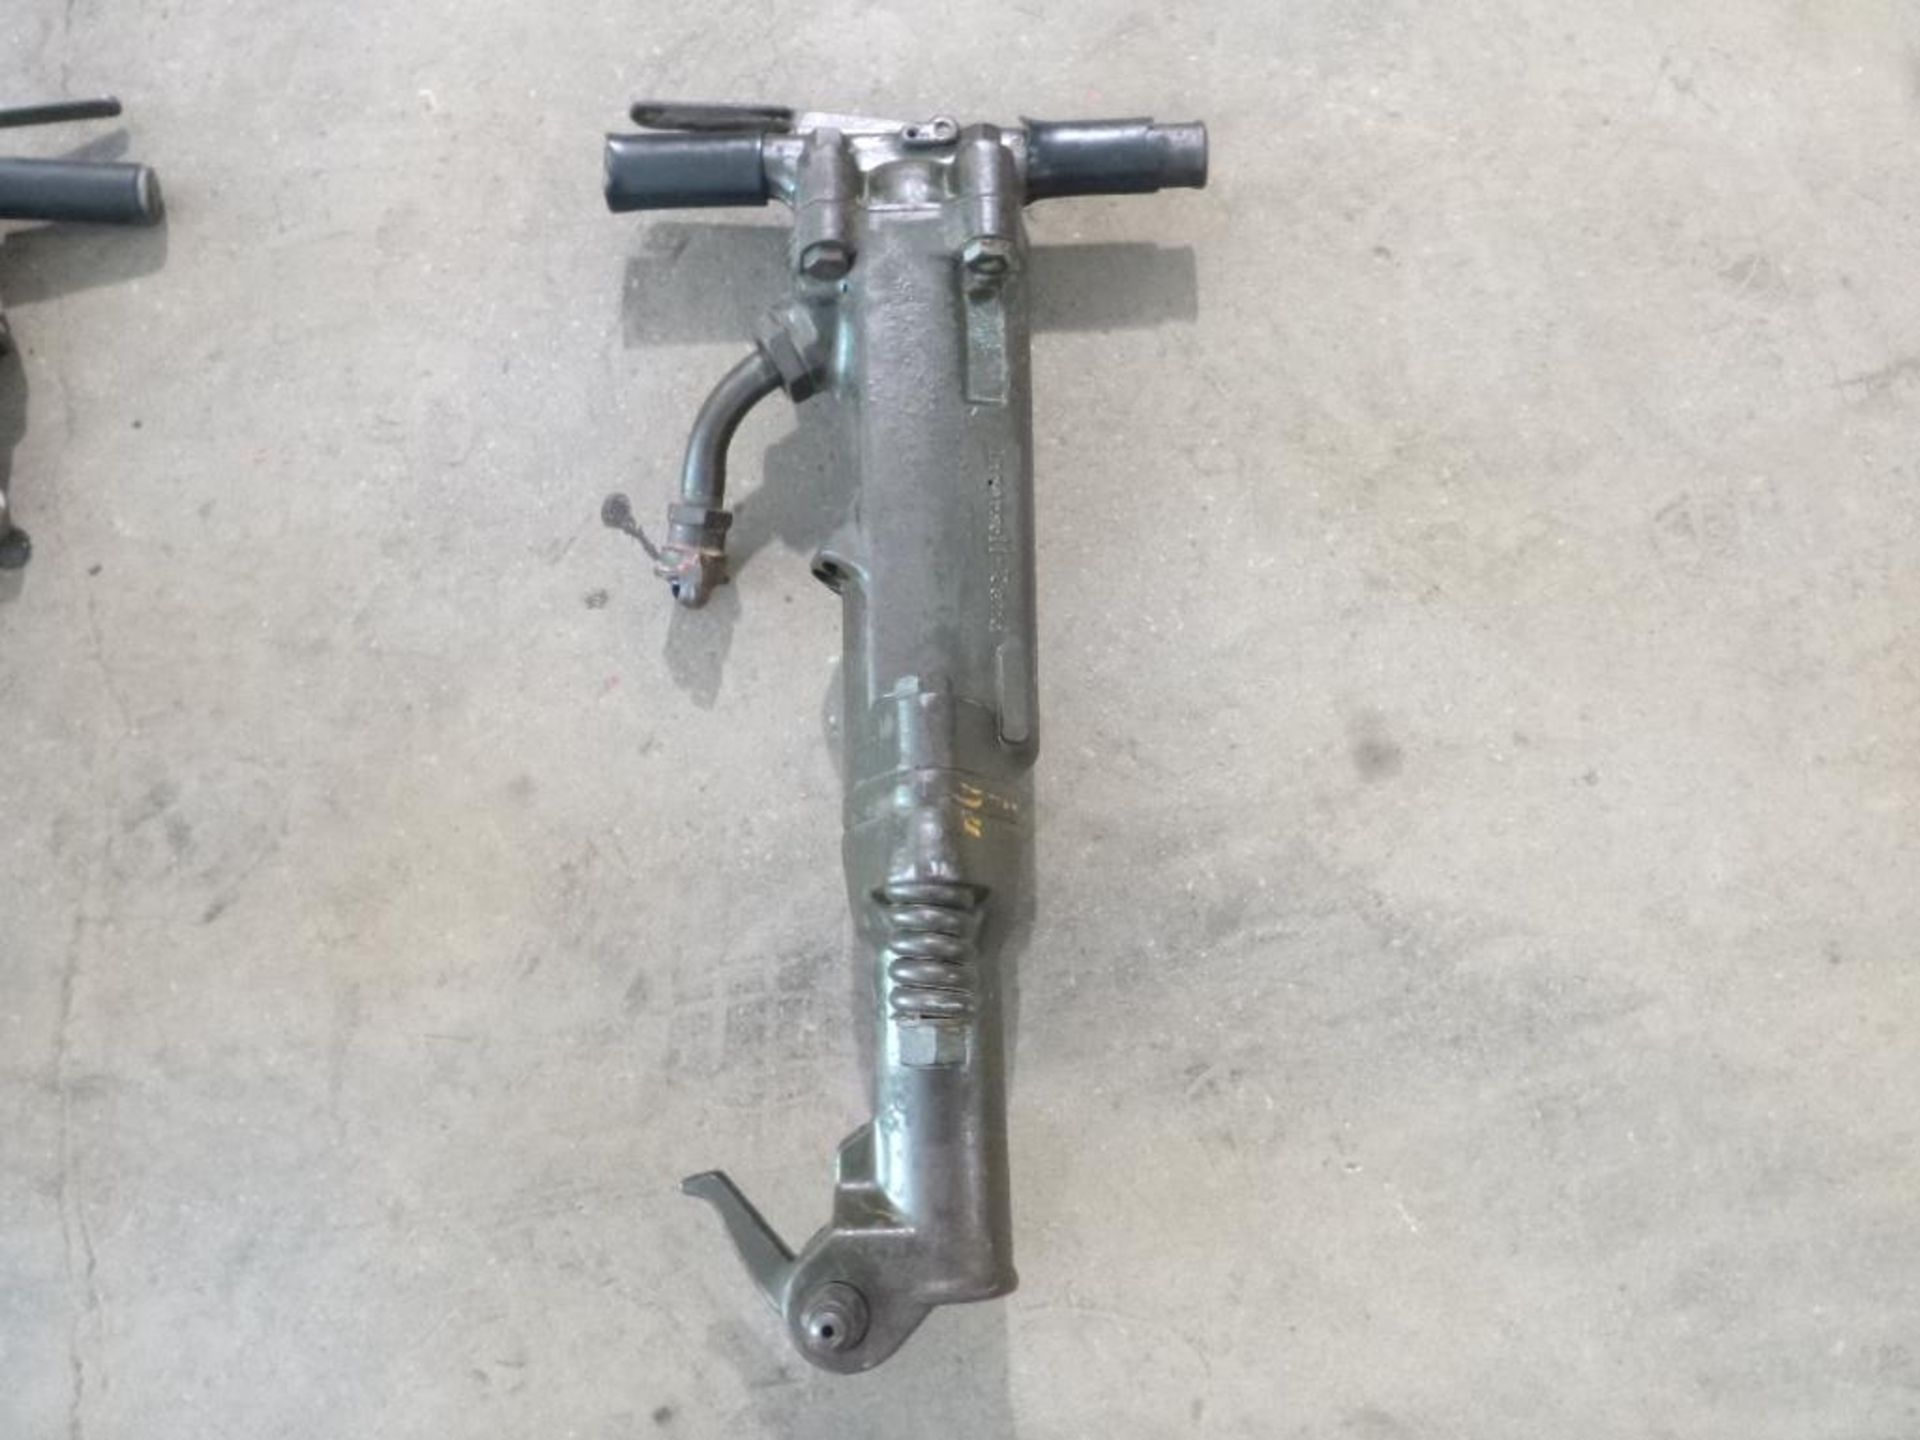 Hammer, Breaker Air 90 lb., Ingersoll Rand, S/N 025W